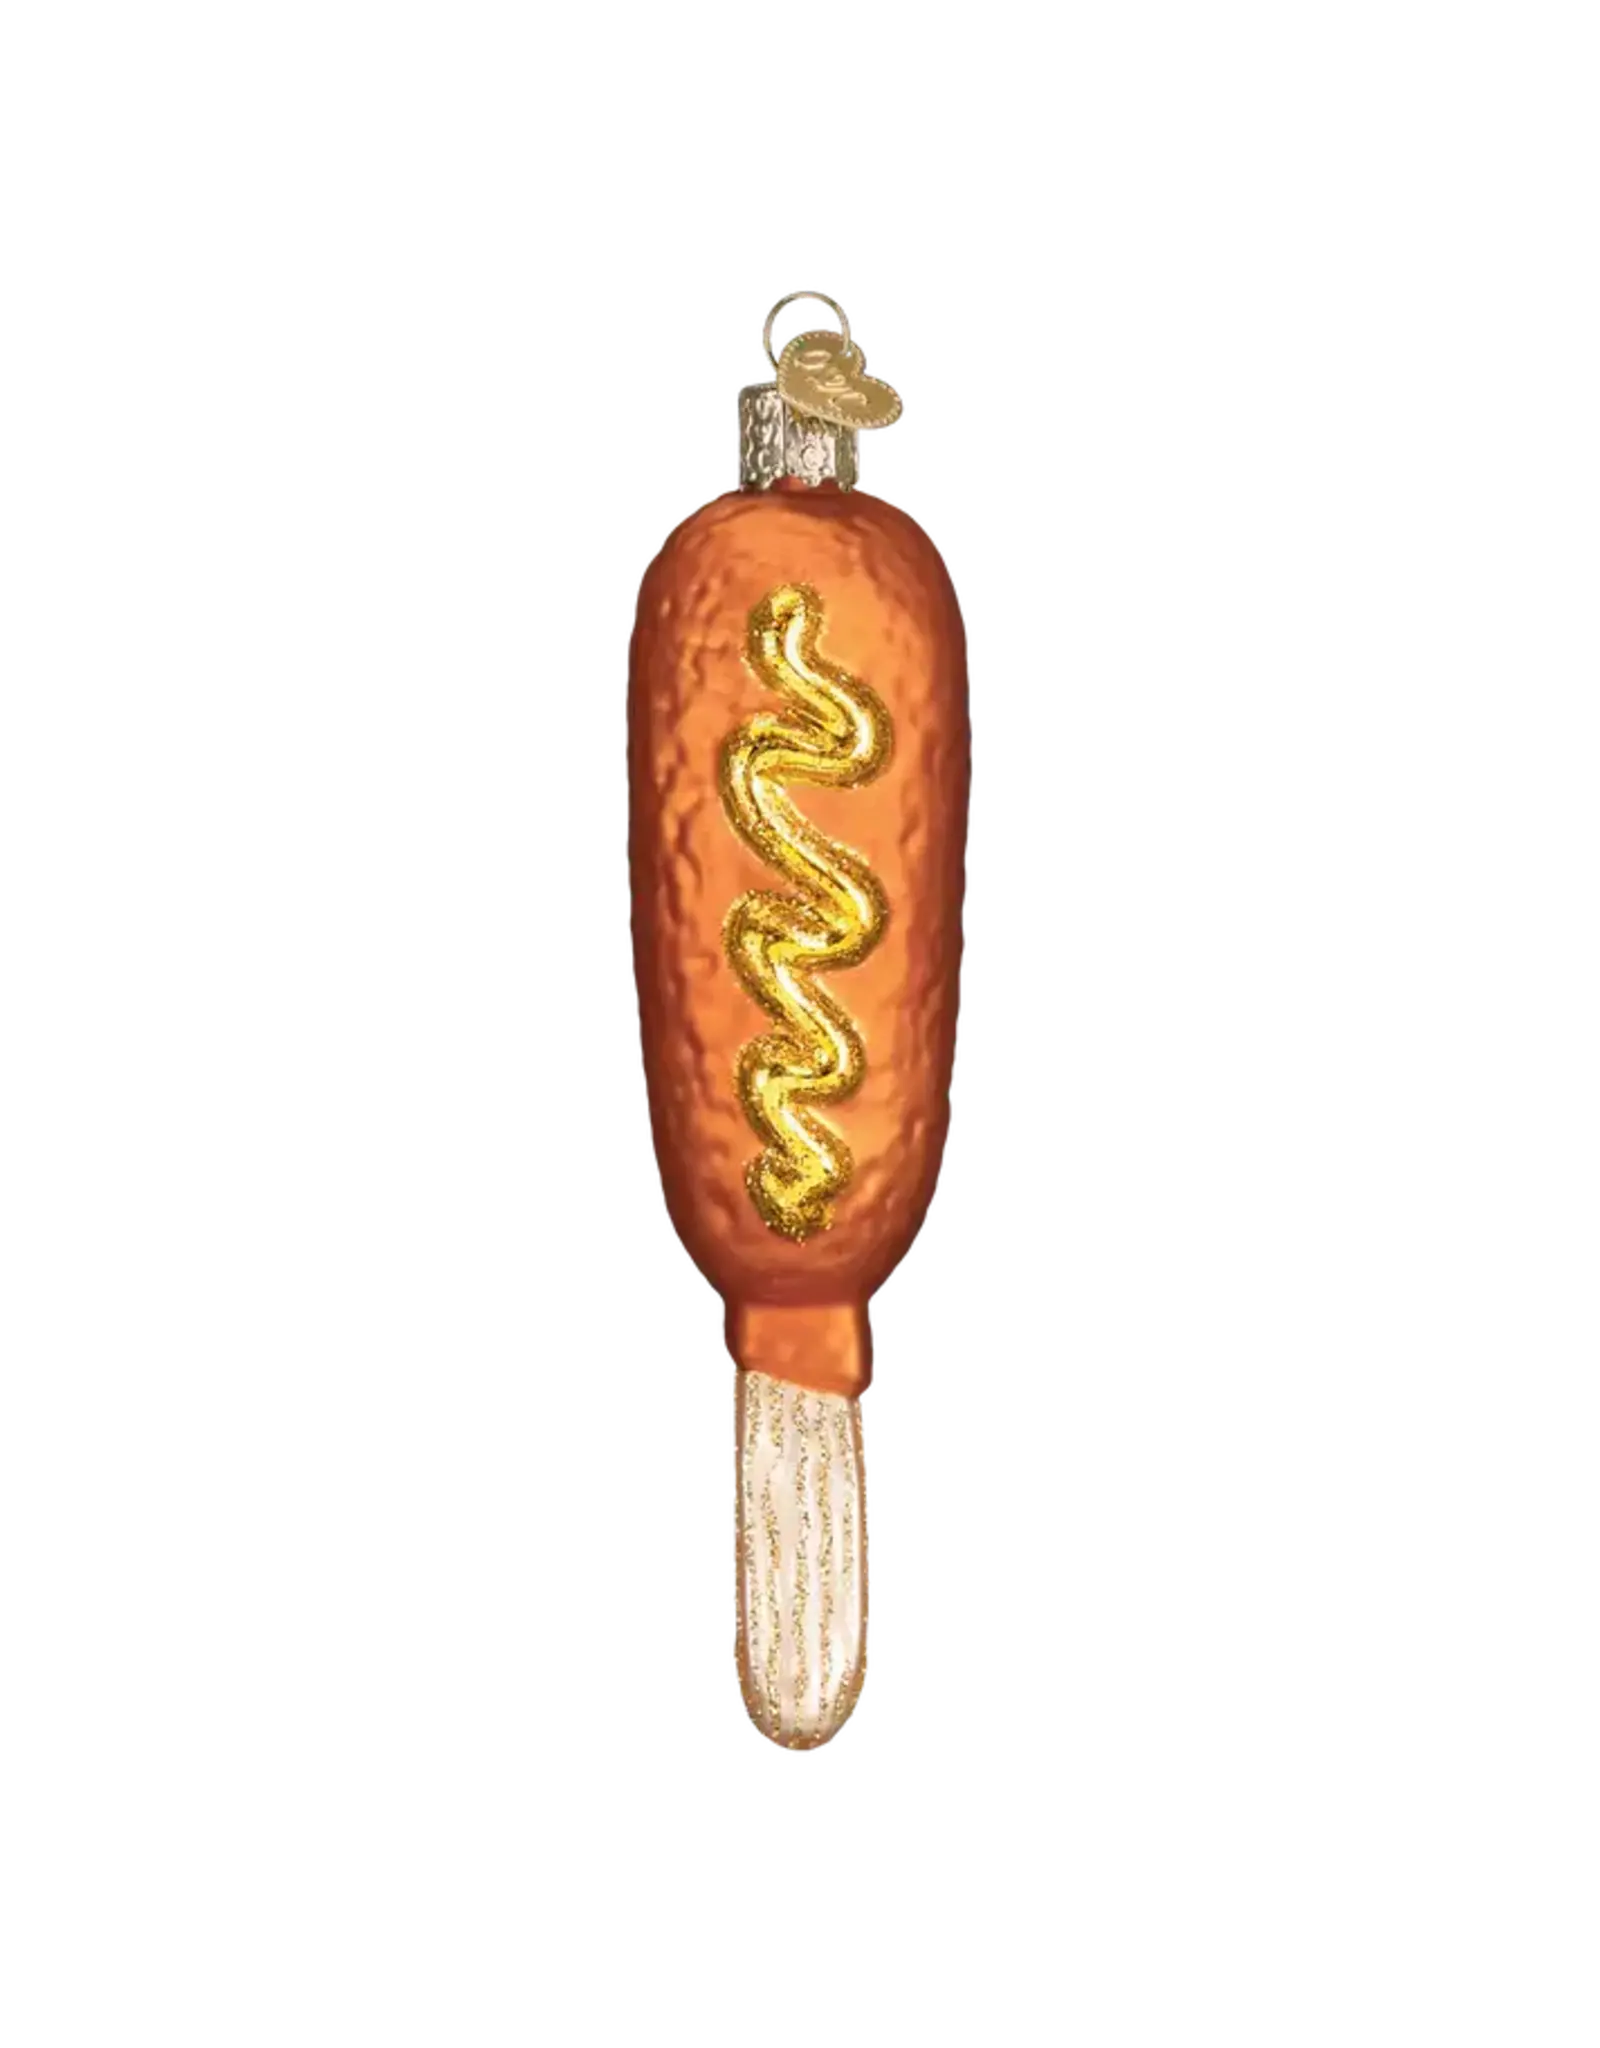 Old World Christmas Corn Dog Ornament